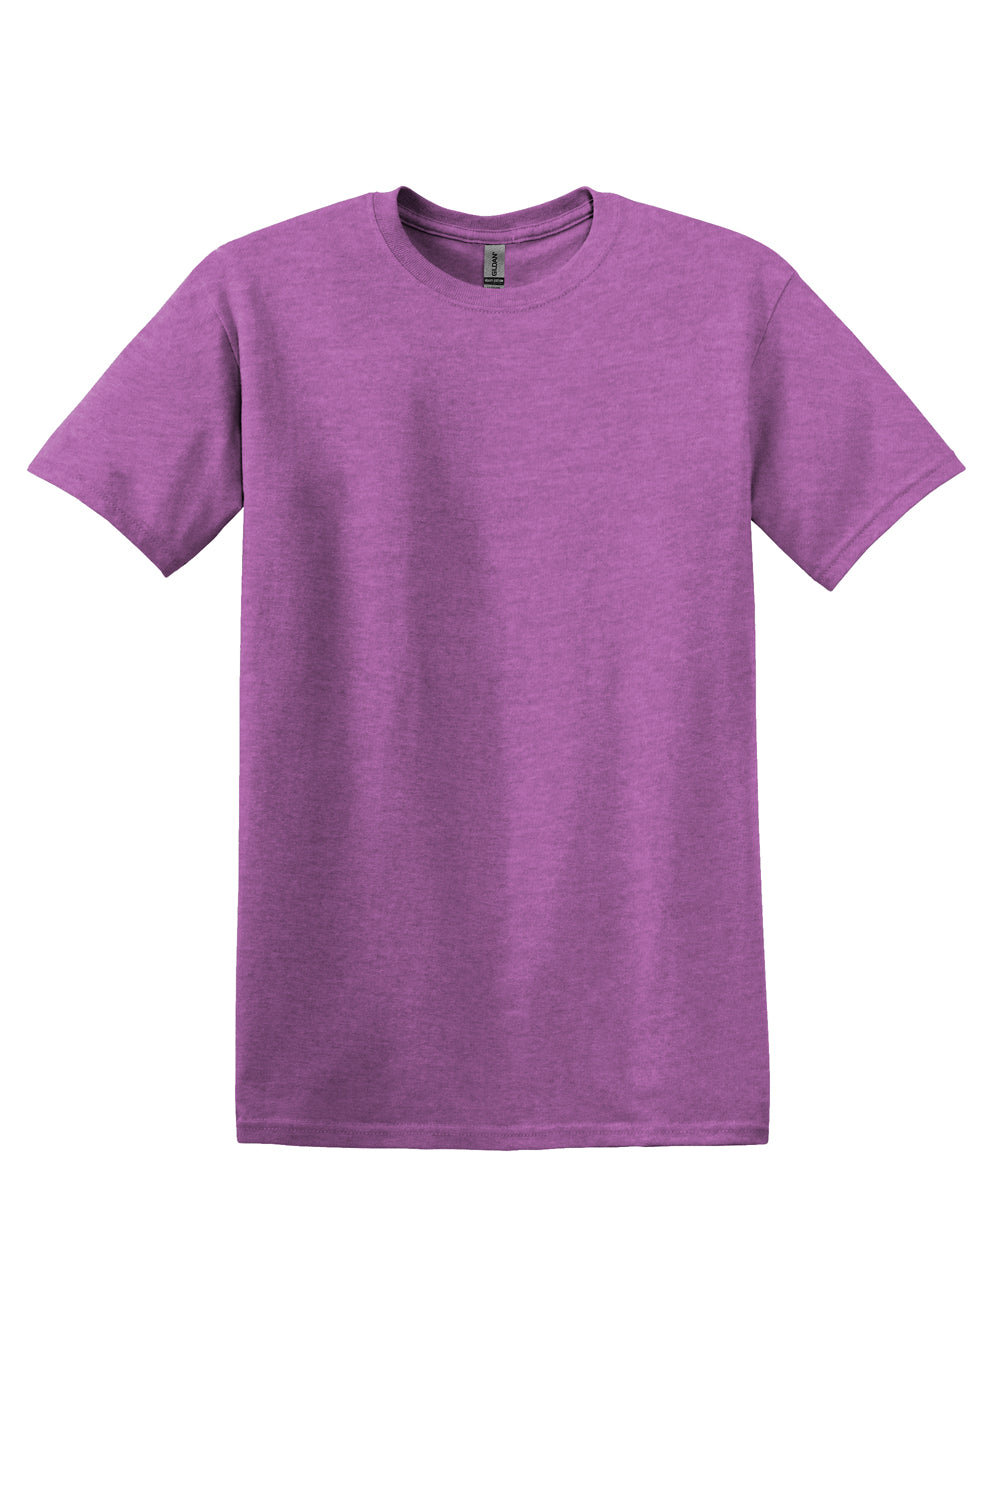 Gildan Mens Short Sleeve Crewneck T-Shirt Heather Radiant Orchid Purple Flat Front